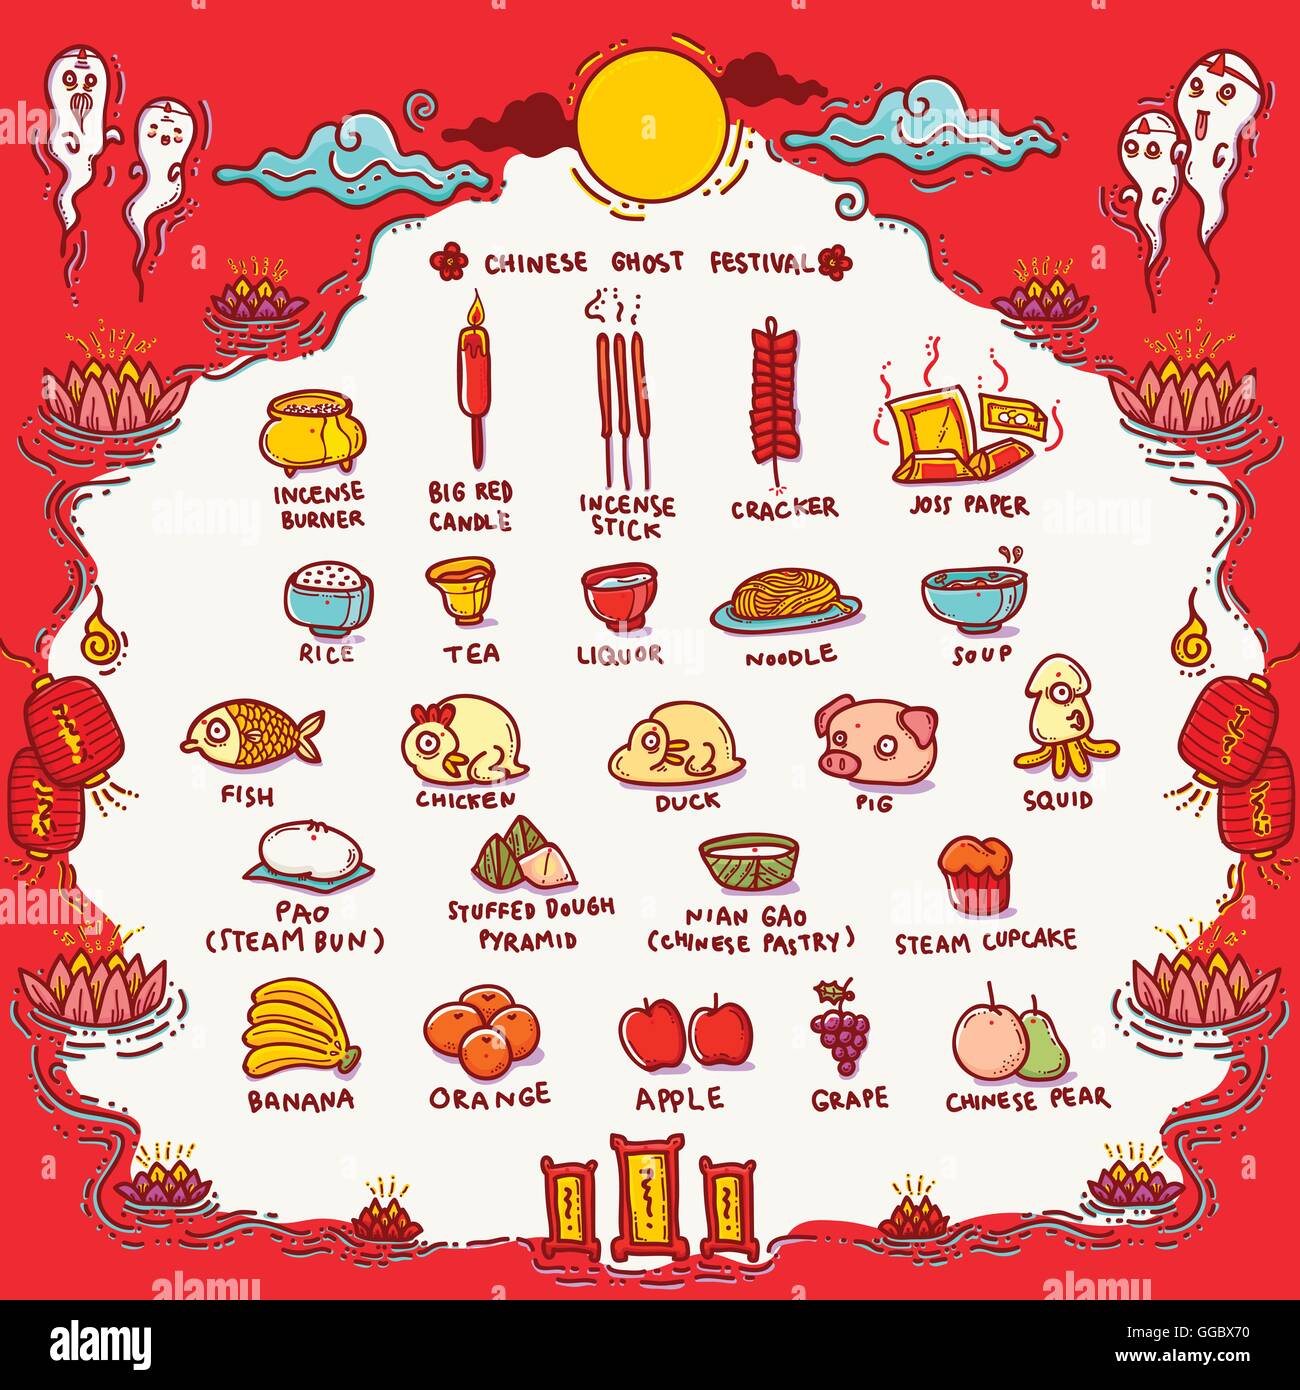 Vektor Illustration des chinesischen Ghost Festival Offerings.Traditional chinesischen Hungry Ghost Festival genannt. Stock Vektor